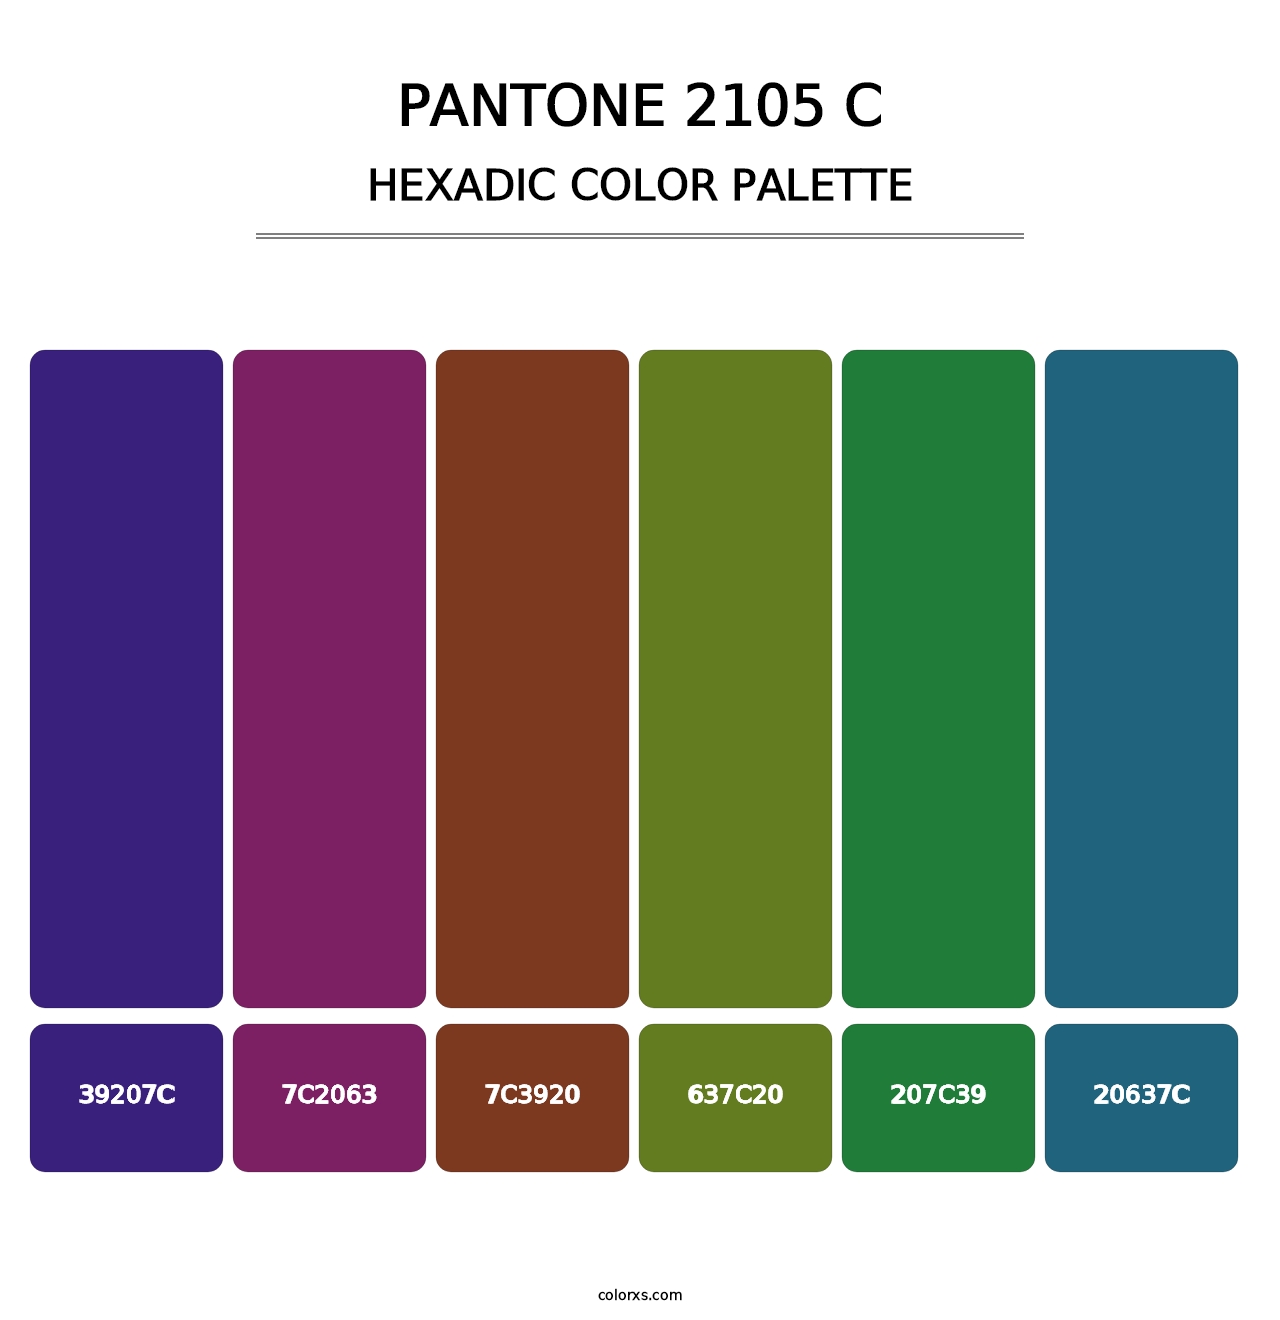 PANTONE 2105 C - Hexadic Color Palette